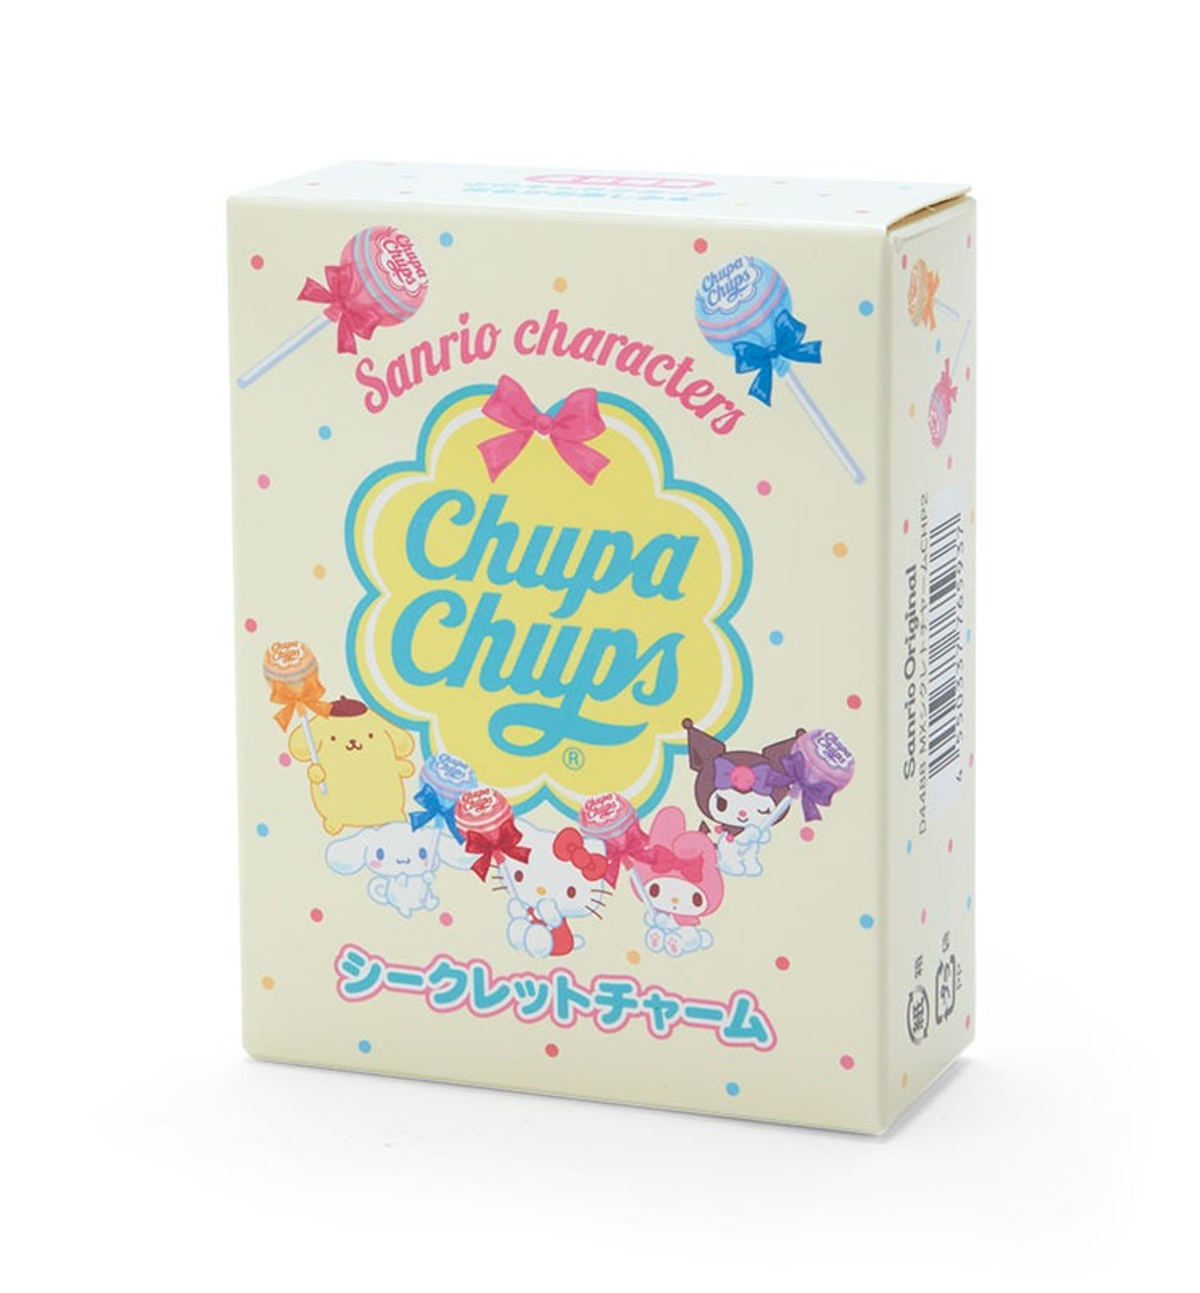 Sanrio Characters & Chupa Chups Acrylic Keyring Serie 2 [Limited Edition]